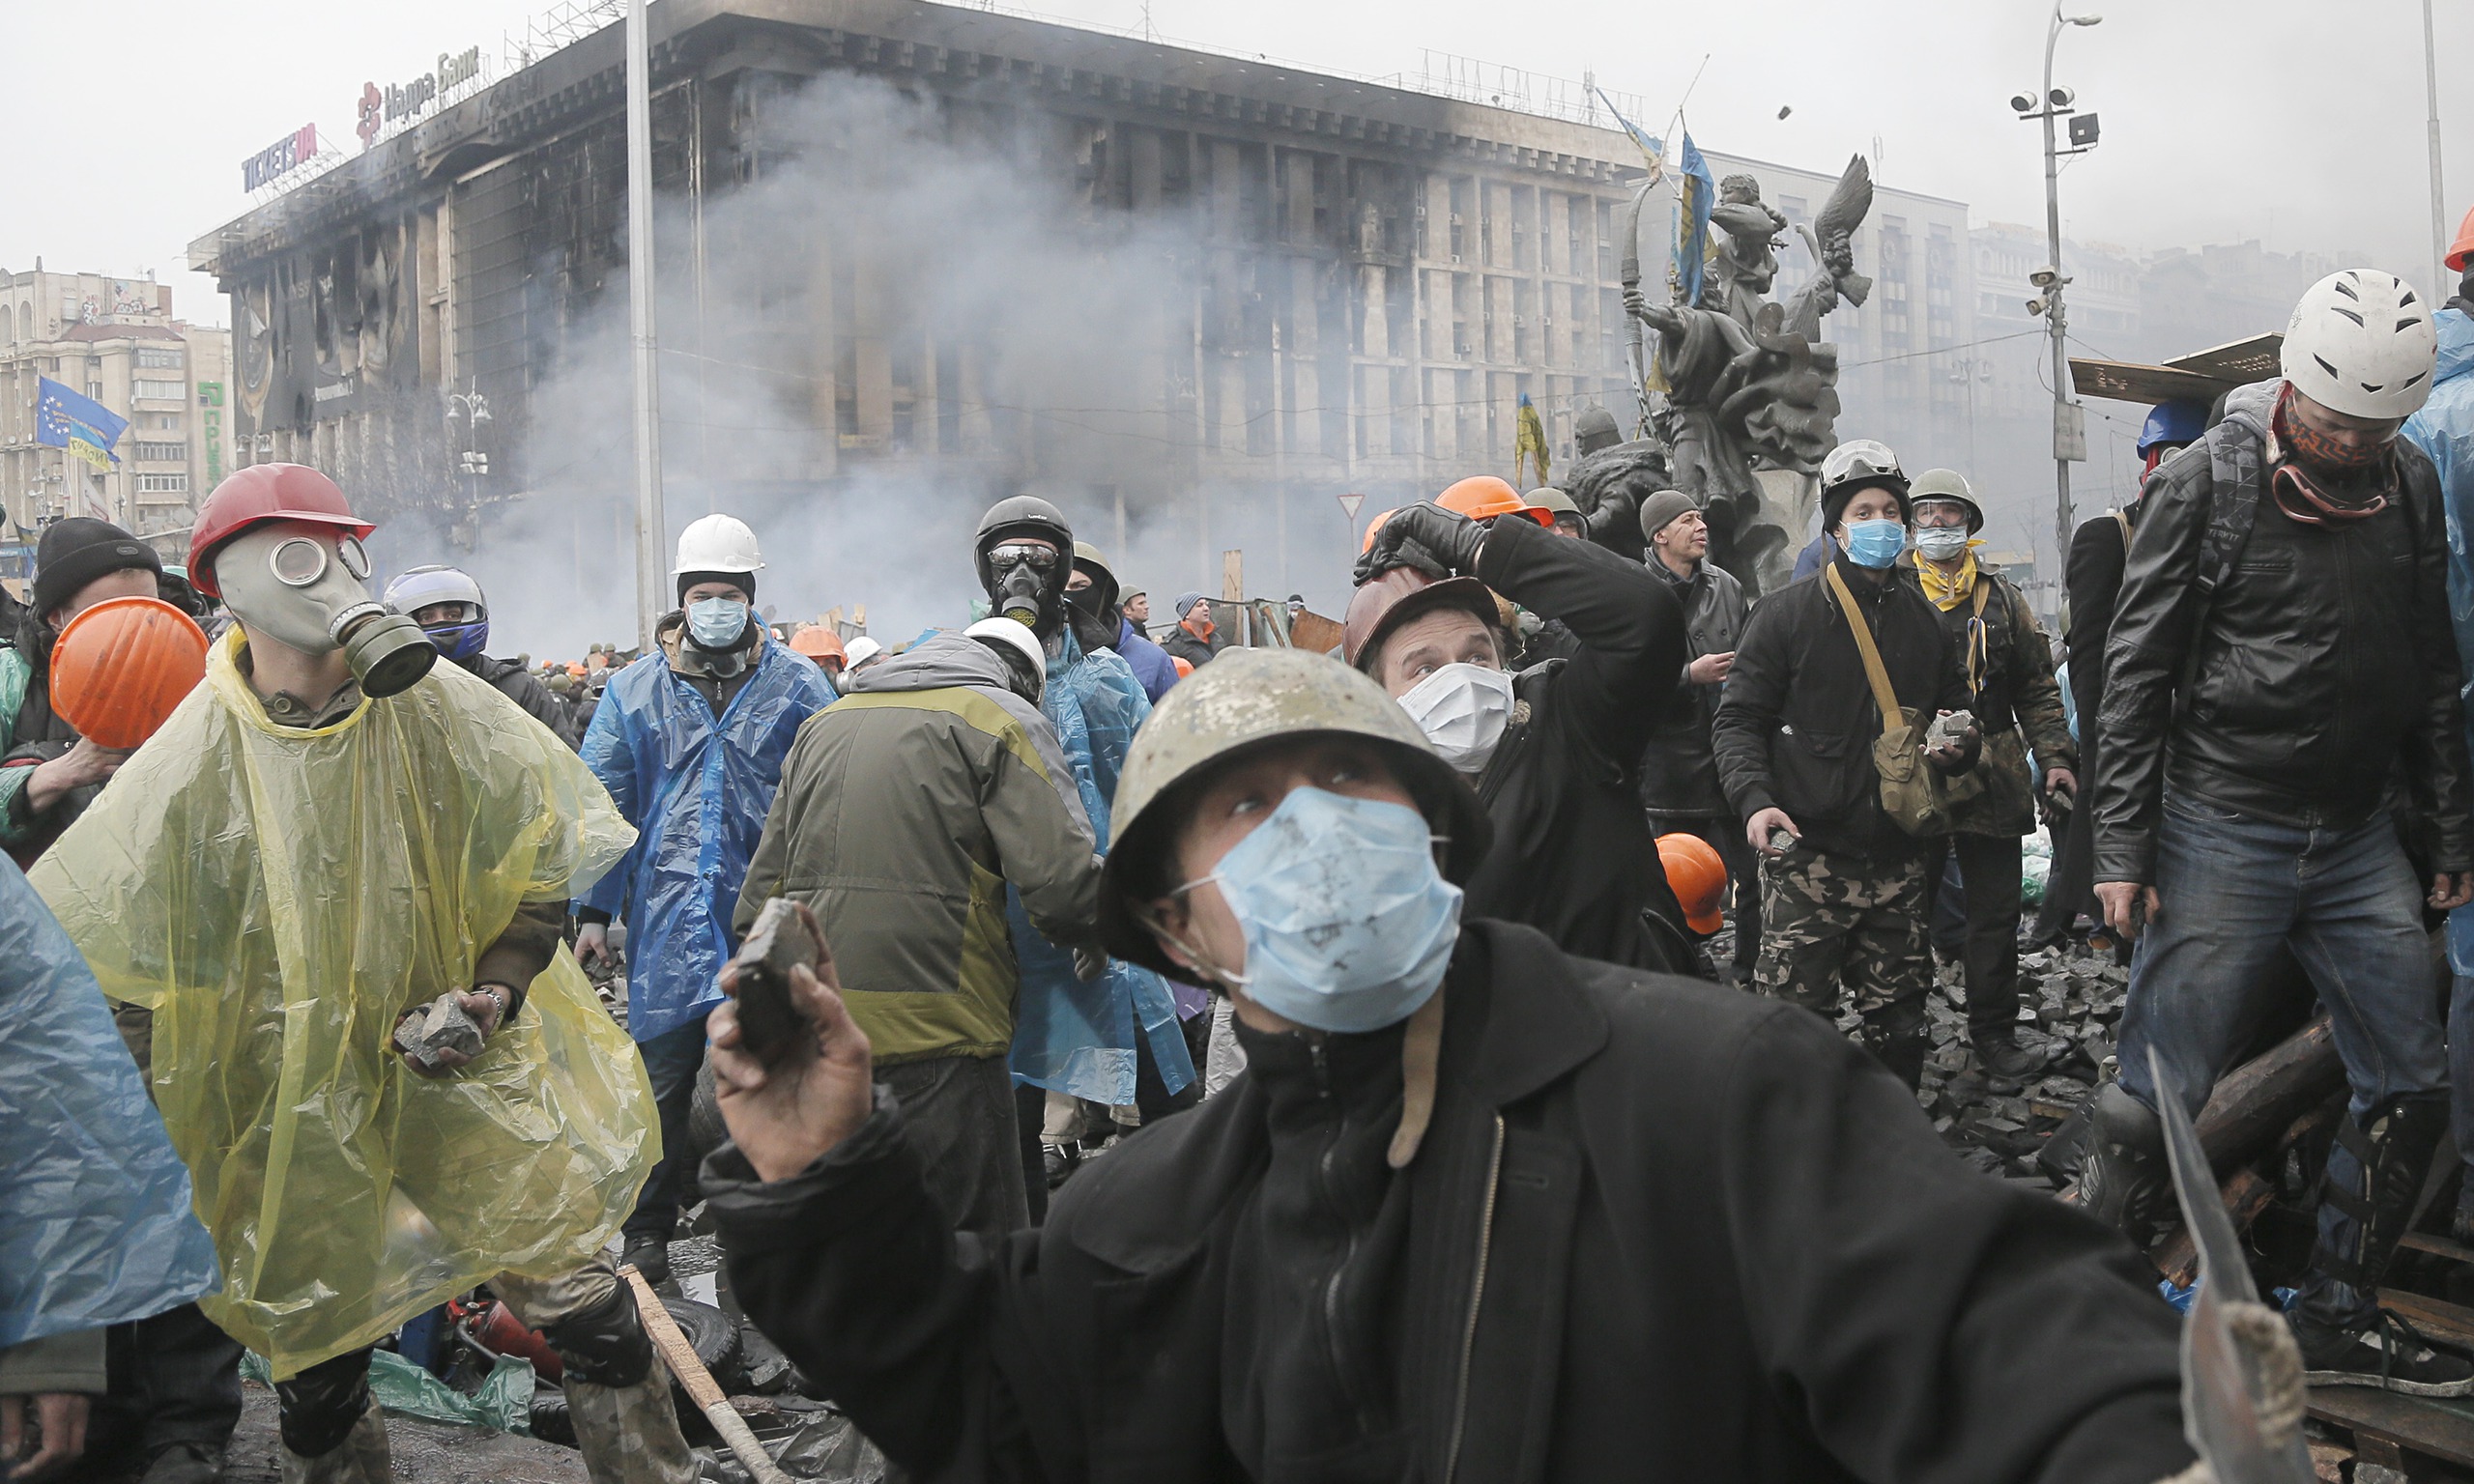 Ukraine Vladimir Putin Lays Blame At Door Of Protesters And The West